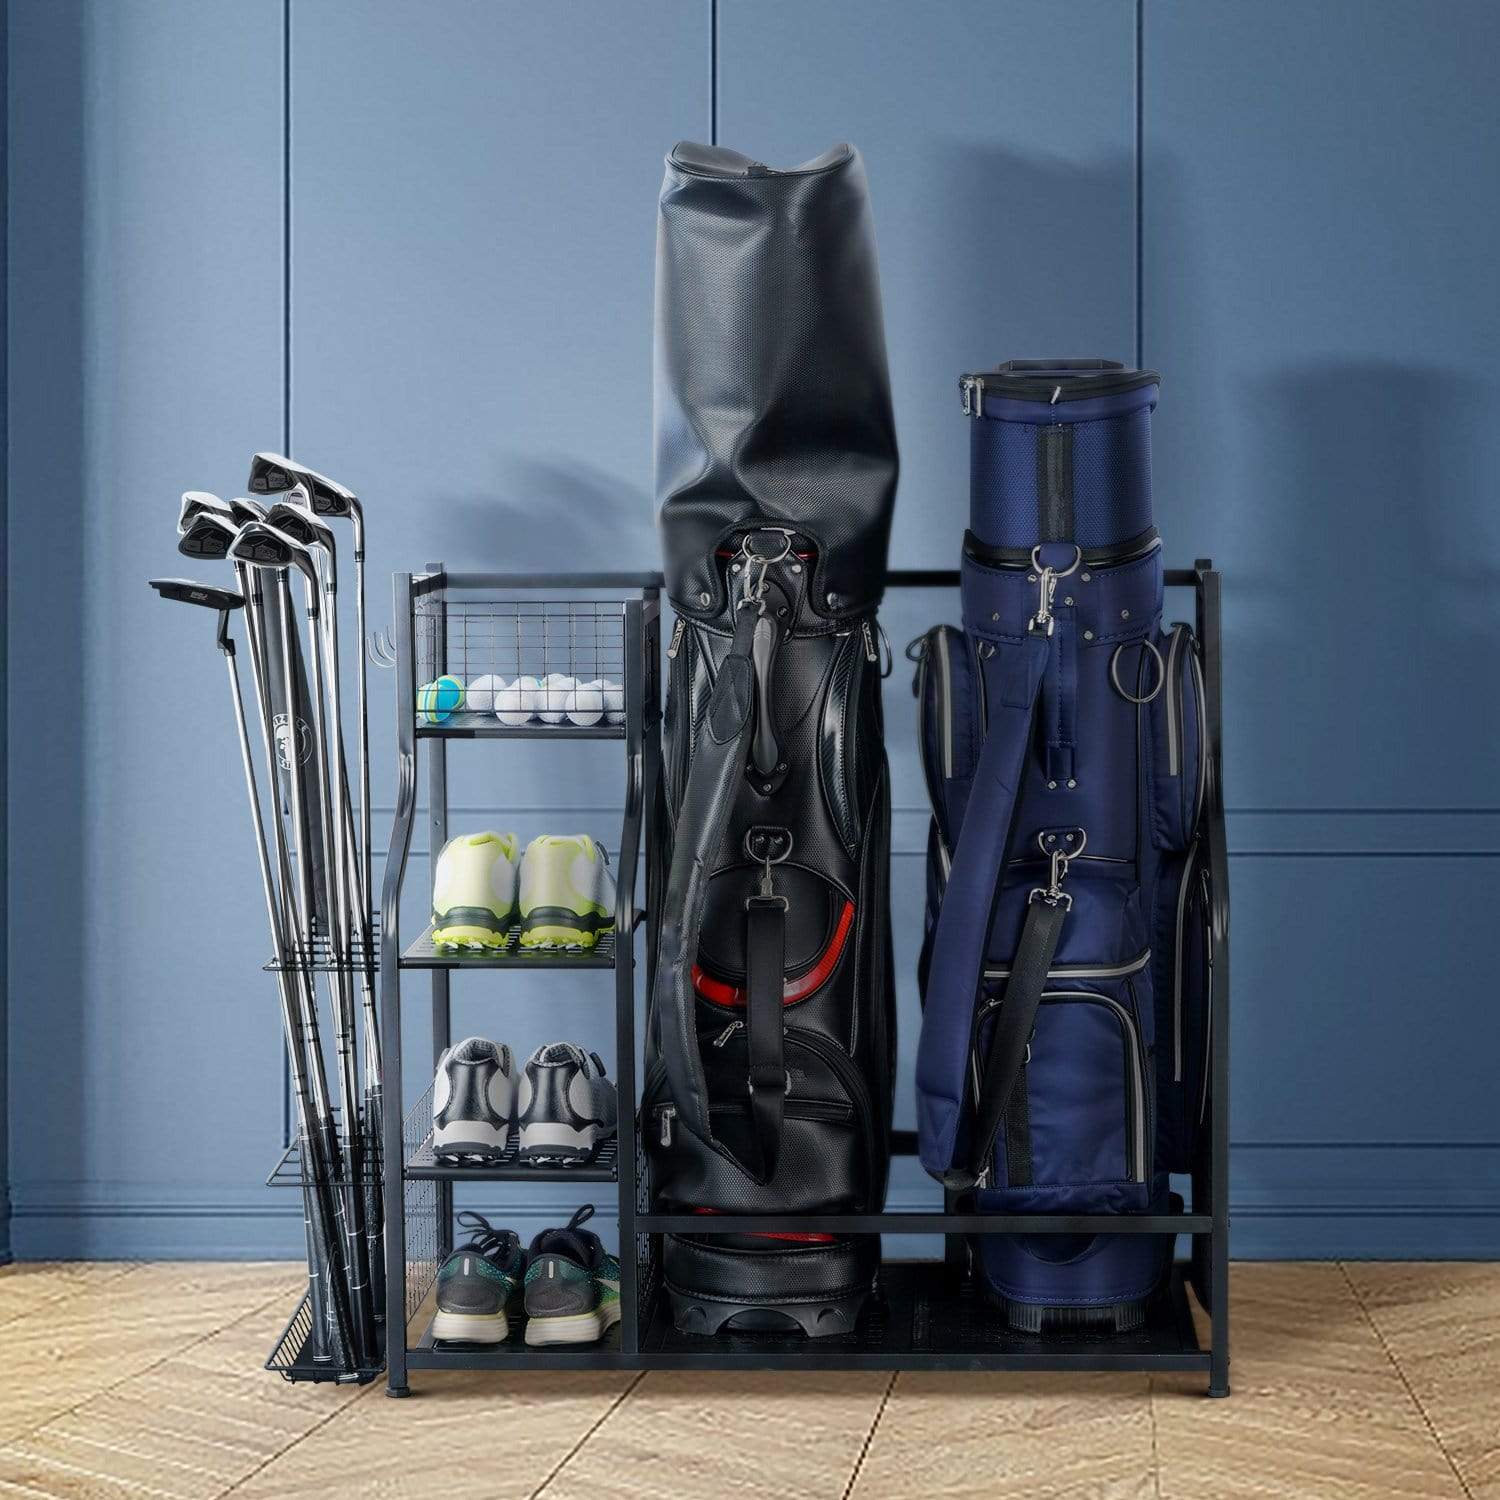 8 Best Golf Bag Garage Storage Ideas and Products 2023